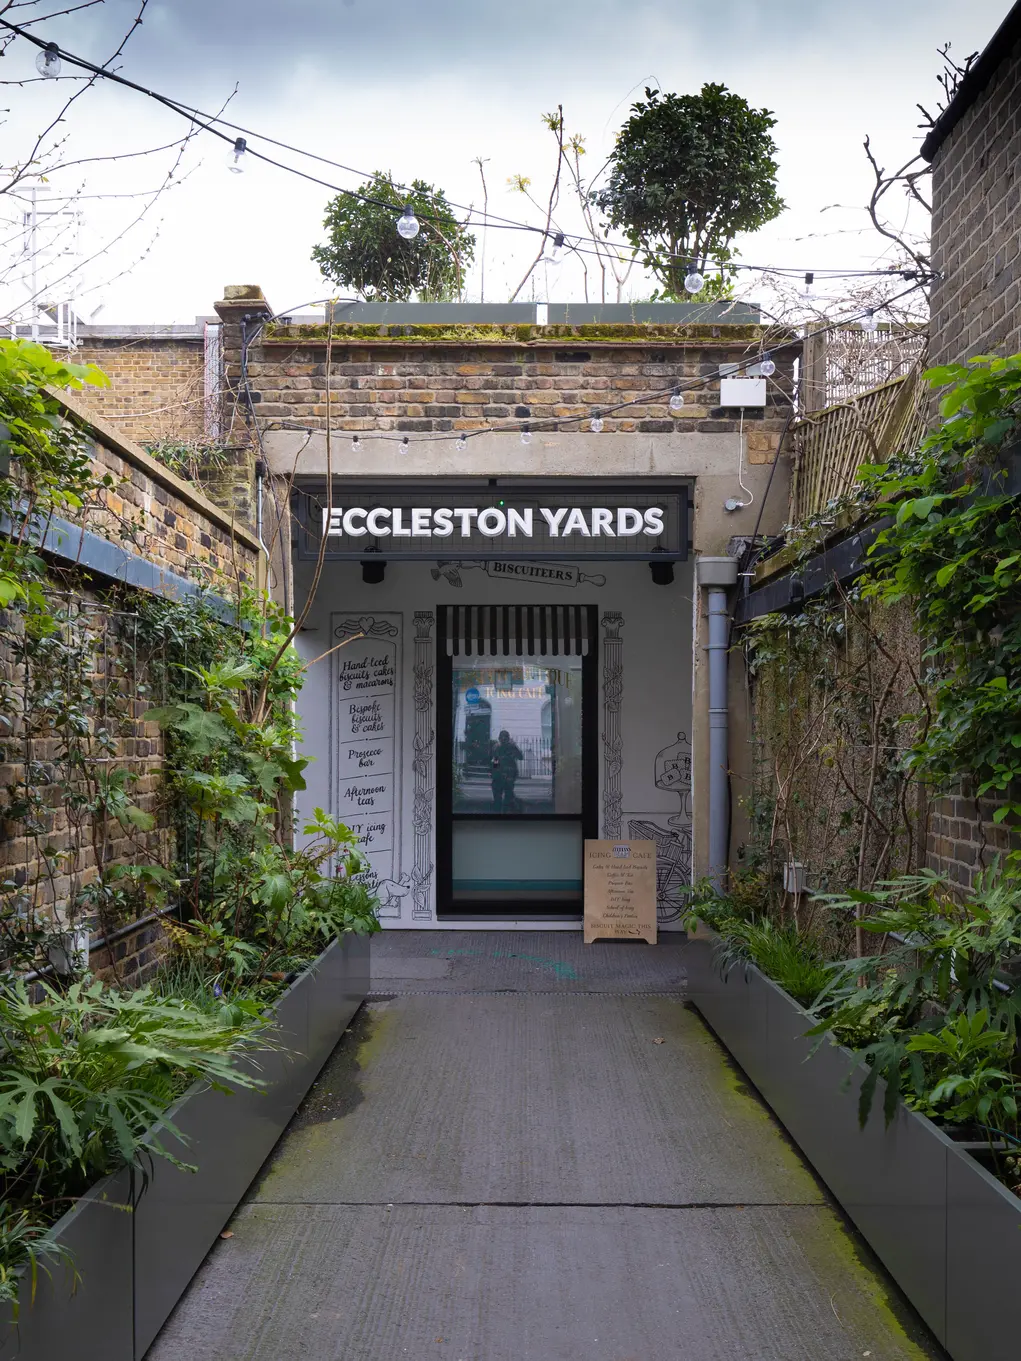 Eccleston yards entrance